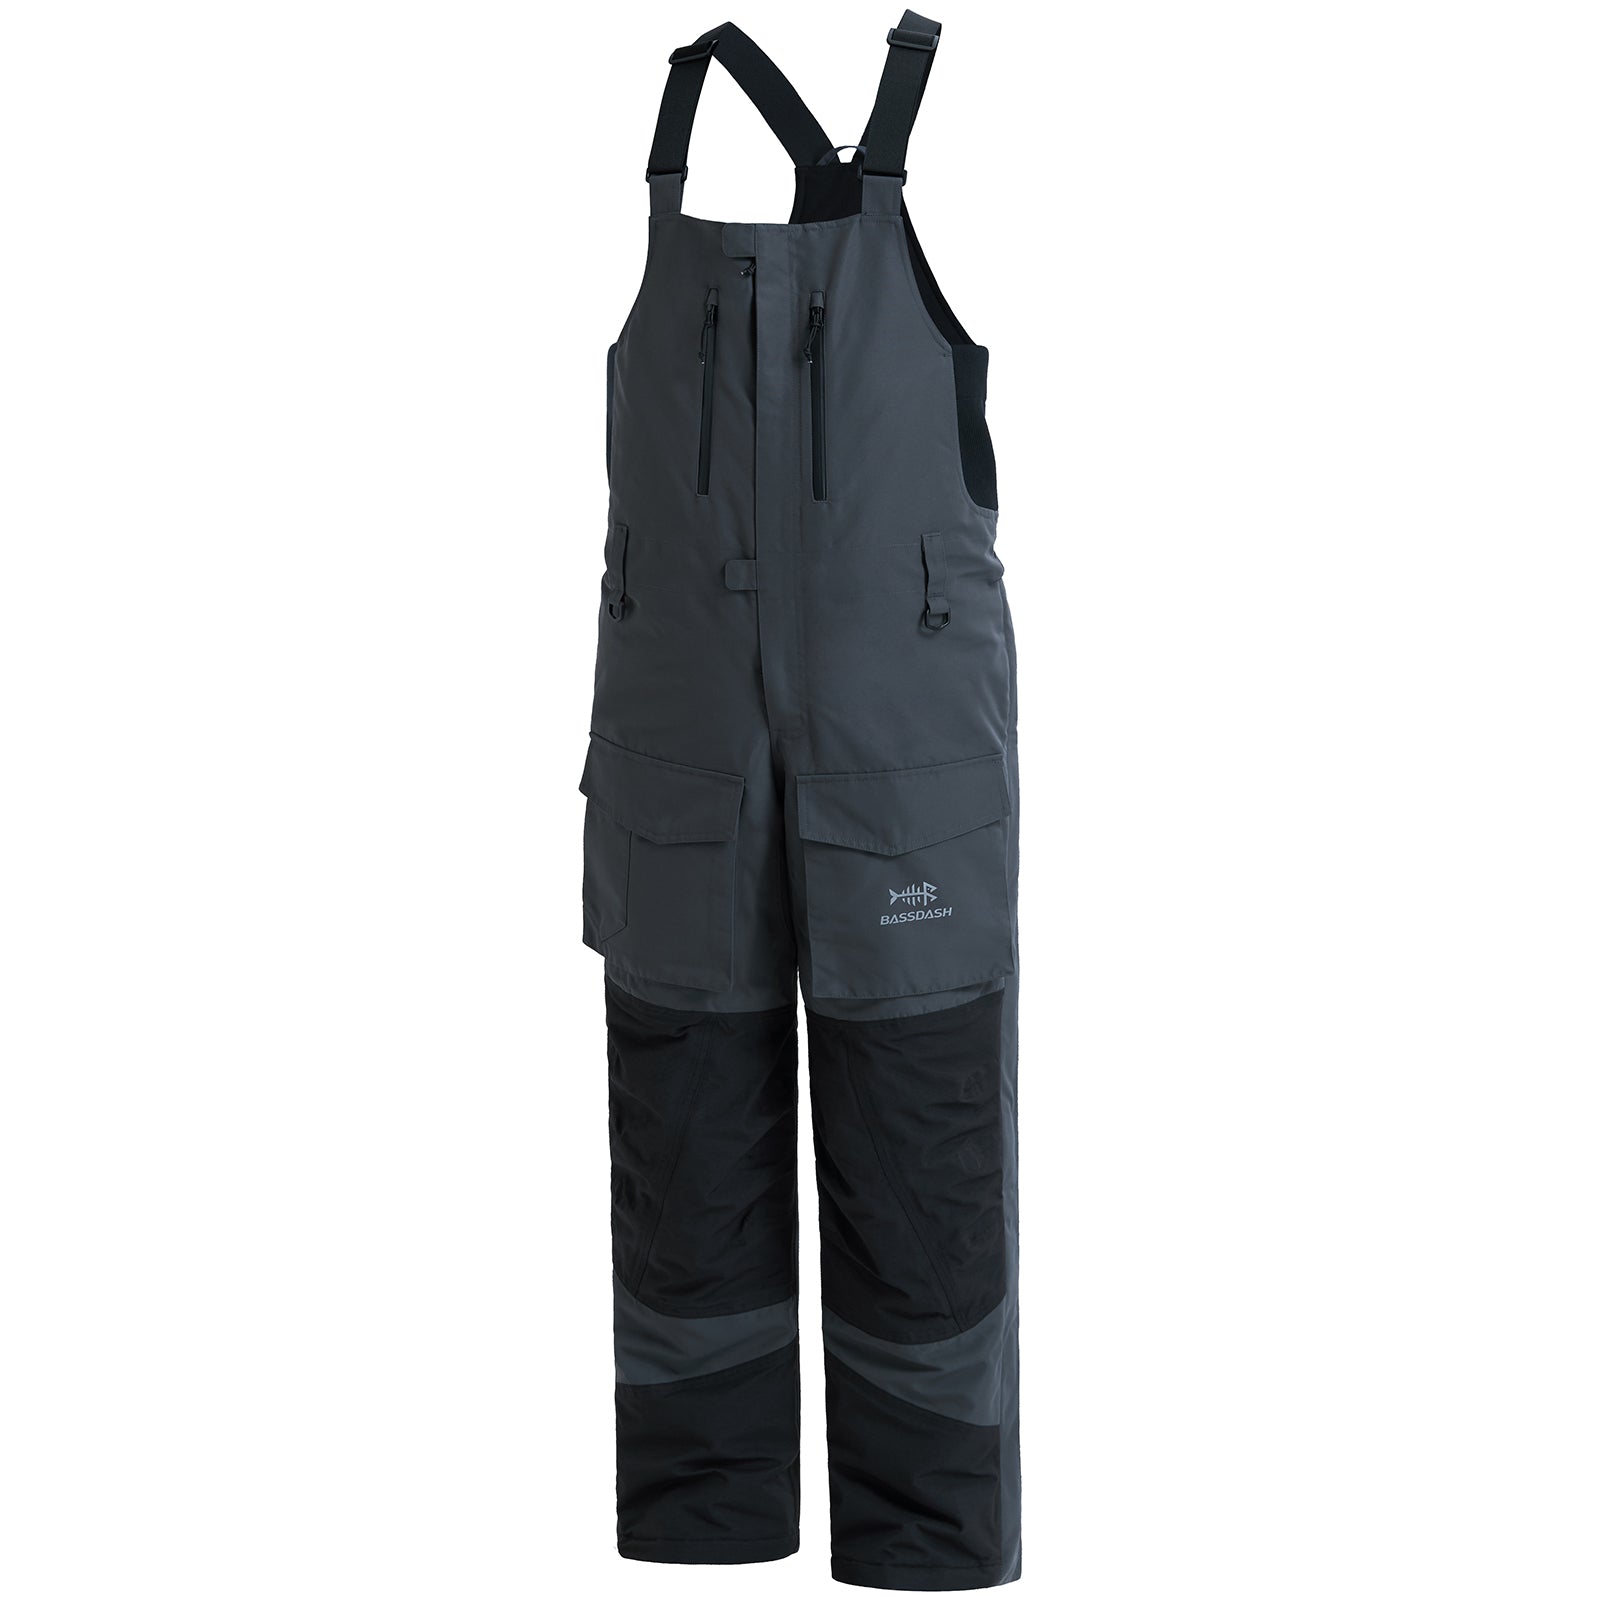 HISEA Waterproof Bib Overall Fishing Bib Pants Made from Durable